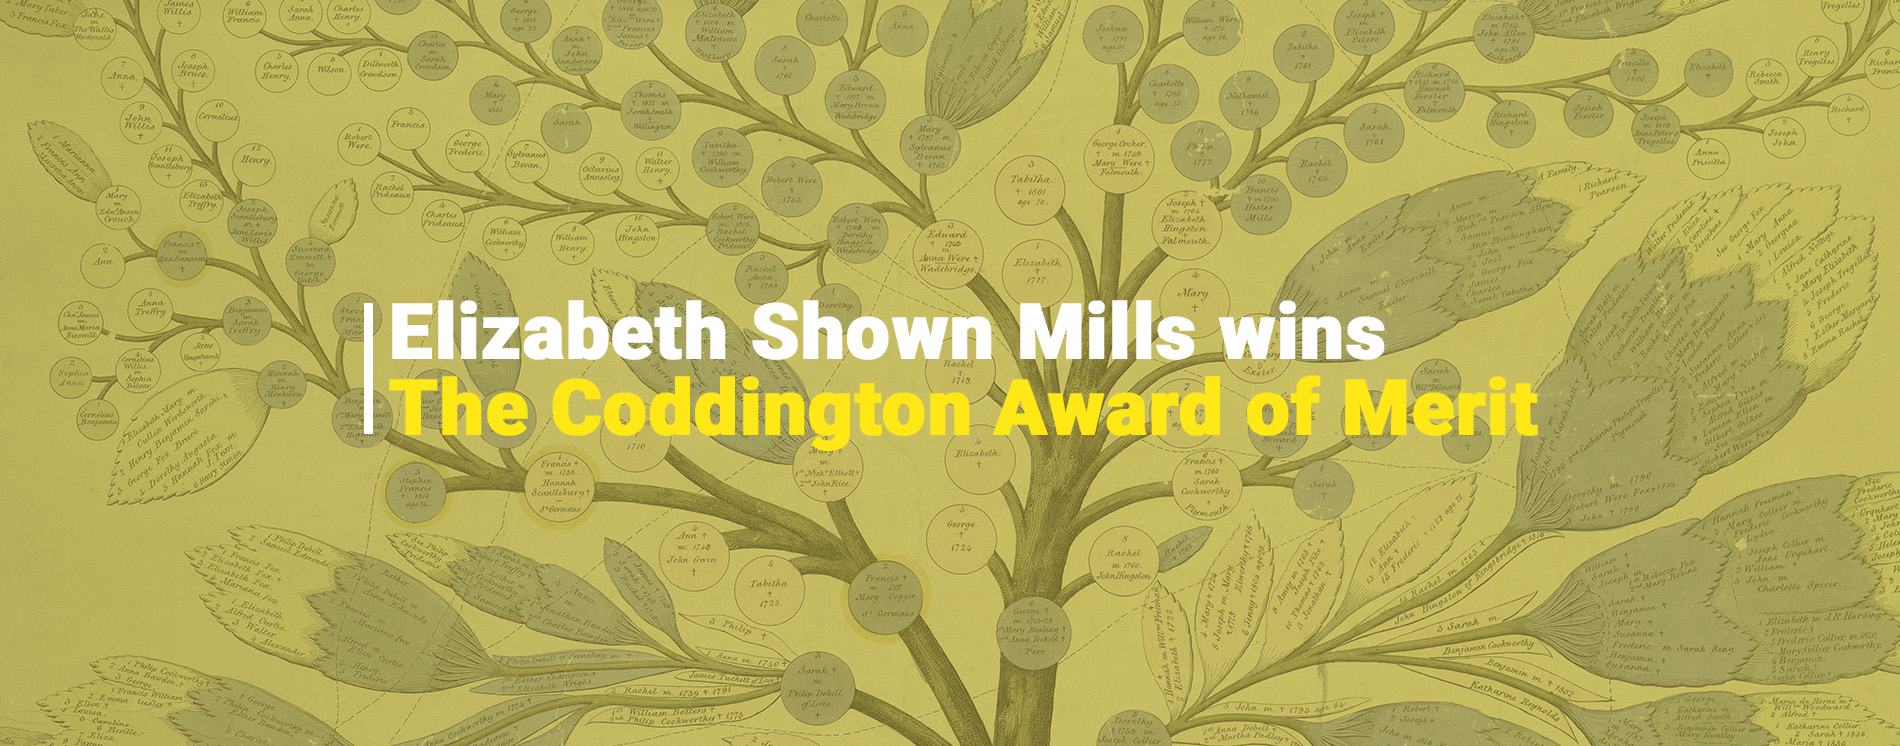 New England Historic Genealogical Society Bestows Prestigious “Coddington Award of Merit” upon Elizabeth Shown Mills